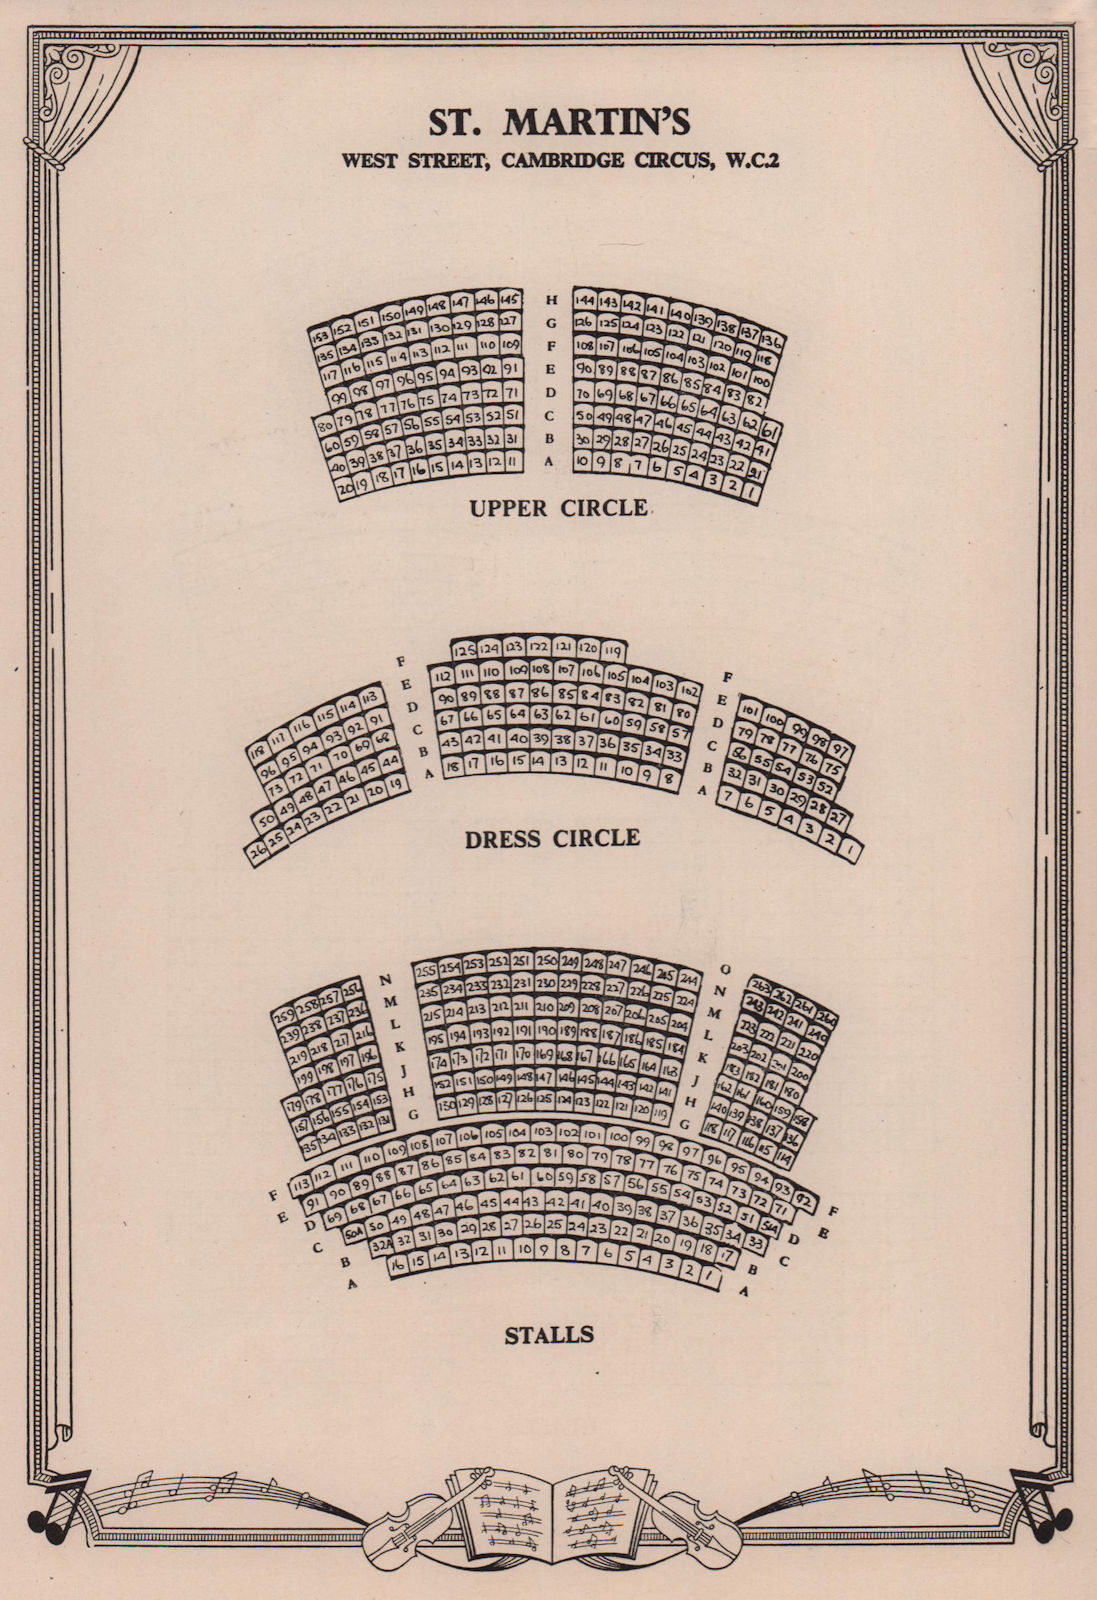 St. Martin's Theatre, West Street, Cambridge Circus. Vintage seating plan 1955